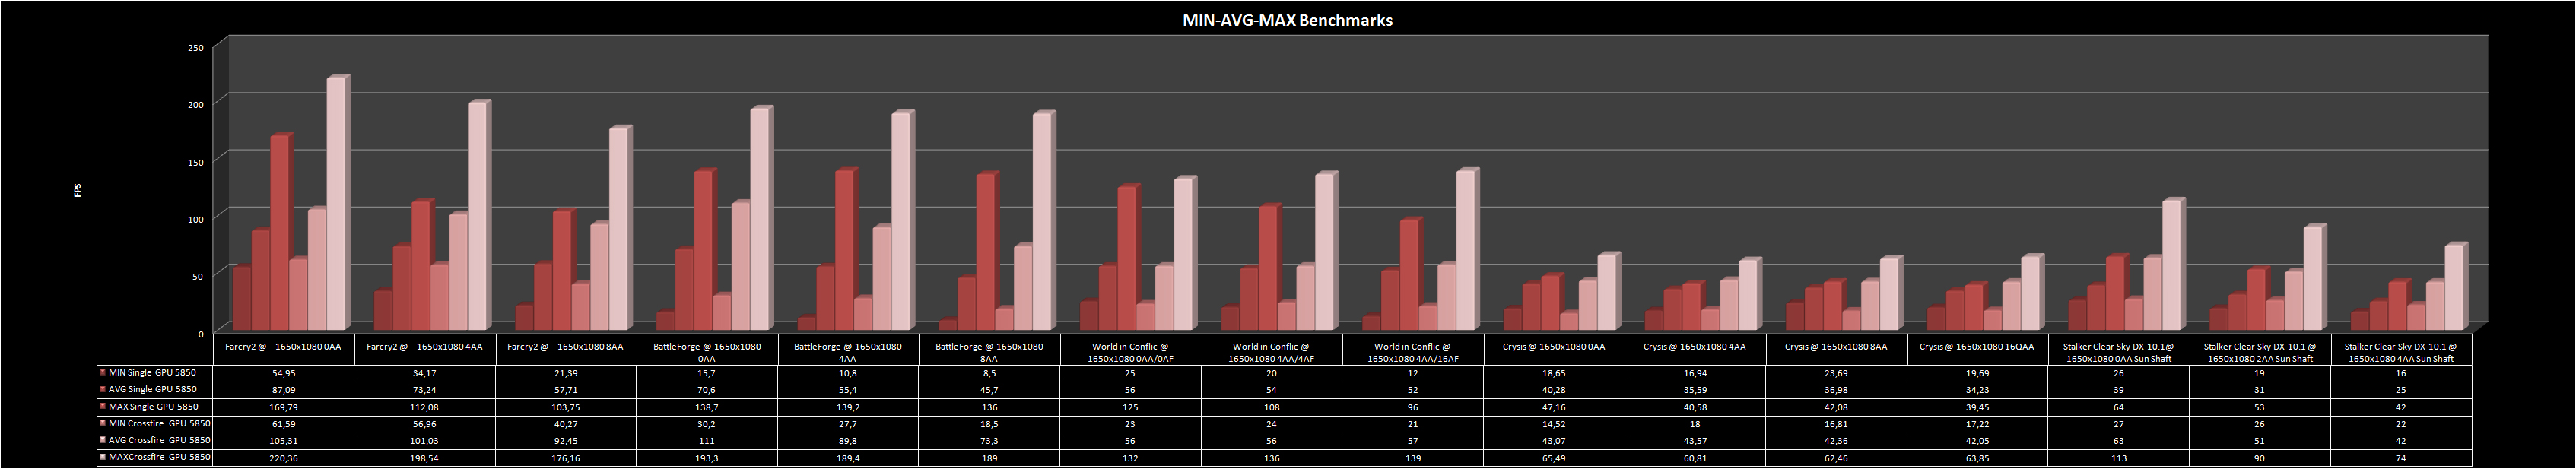 min-avg-max-benchmarks.jpg